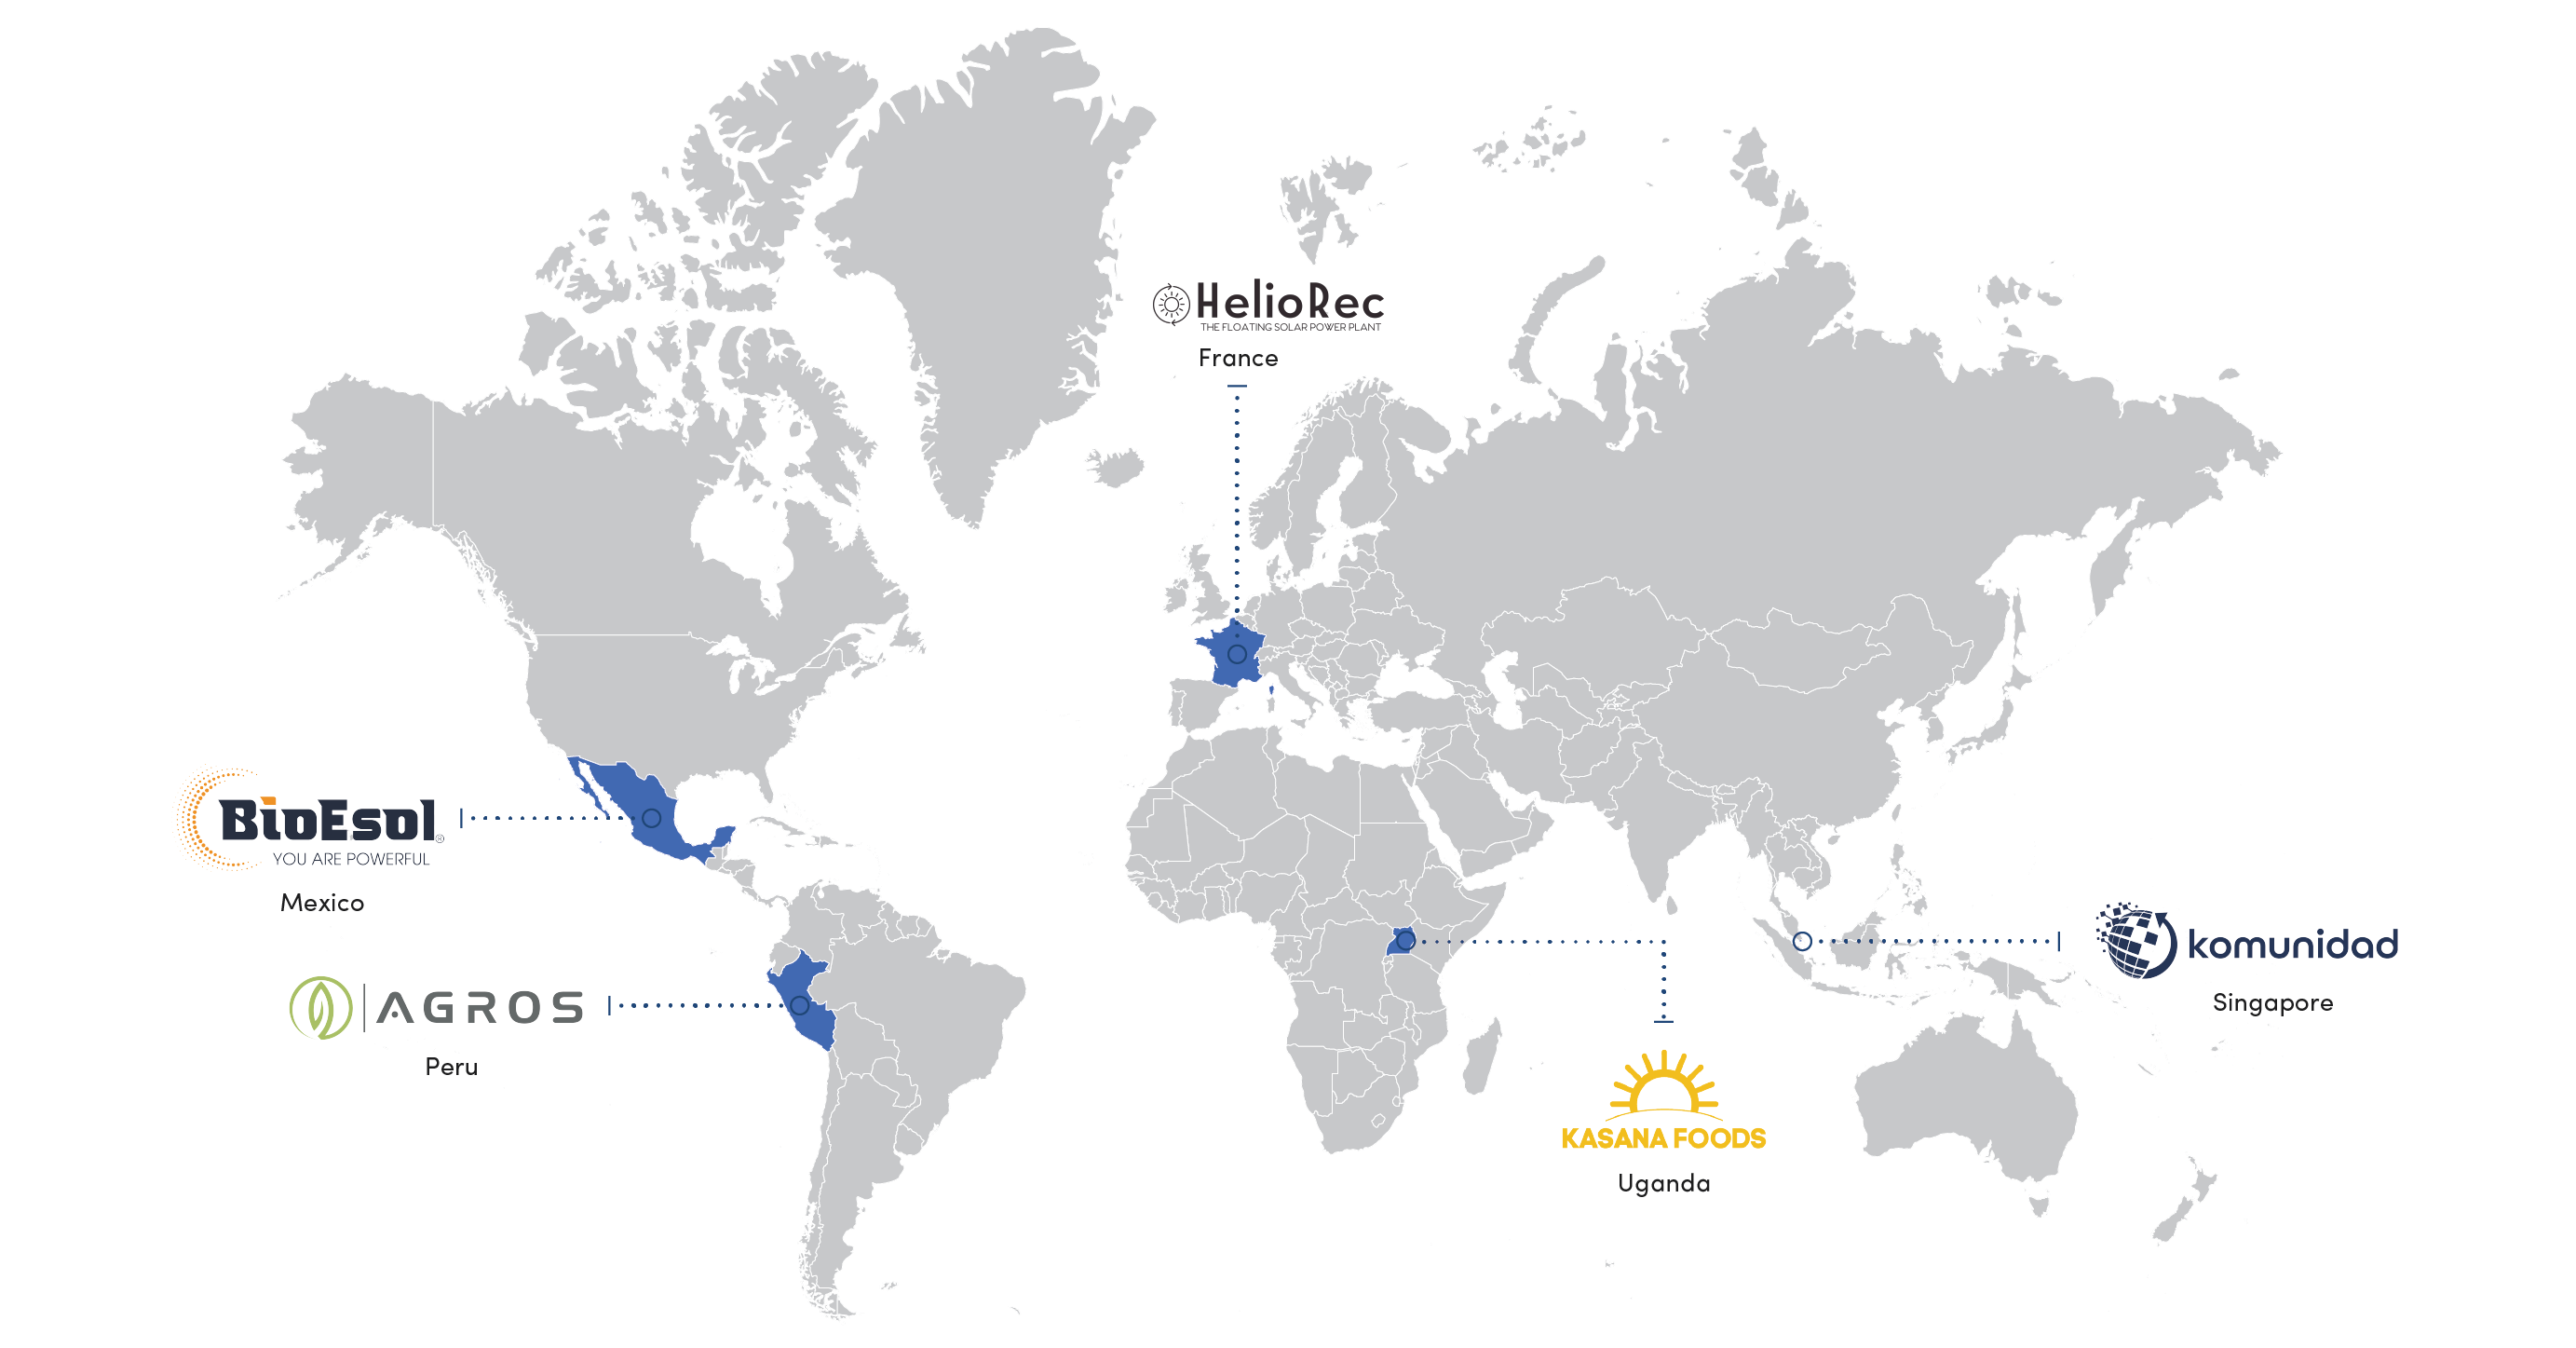 World map of climate innovation with location pins including: Kasana Foods (Uganda), Komunidad Global (Singapore), BioEsol (Mexico), HelioRec (France), Agros (Peru)